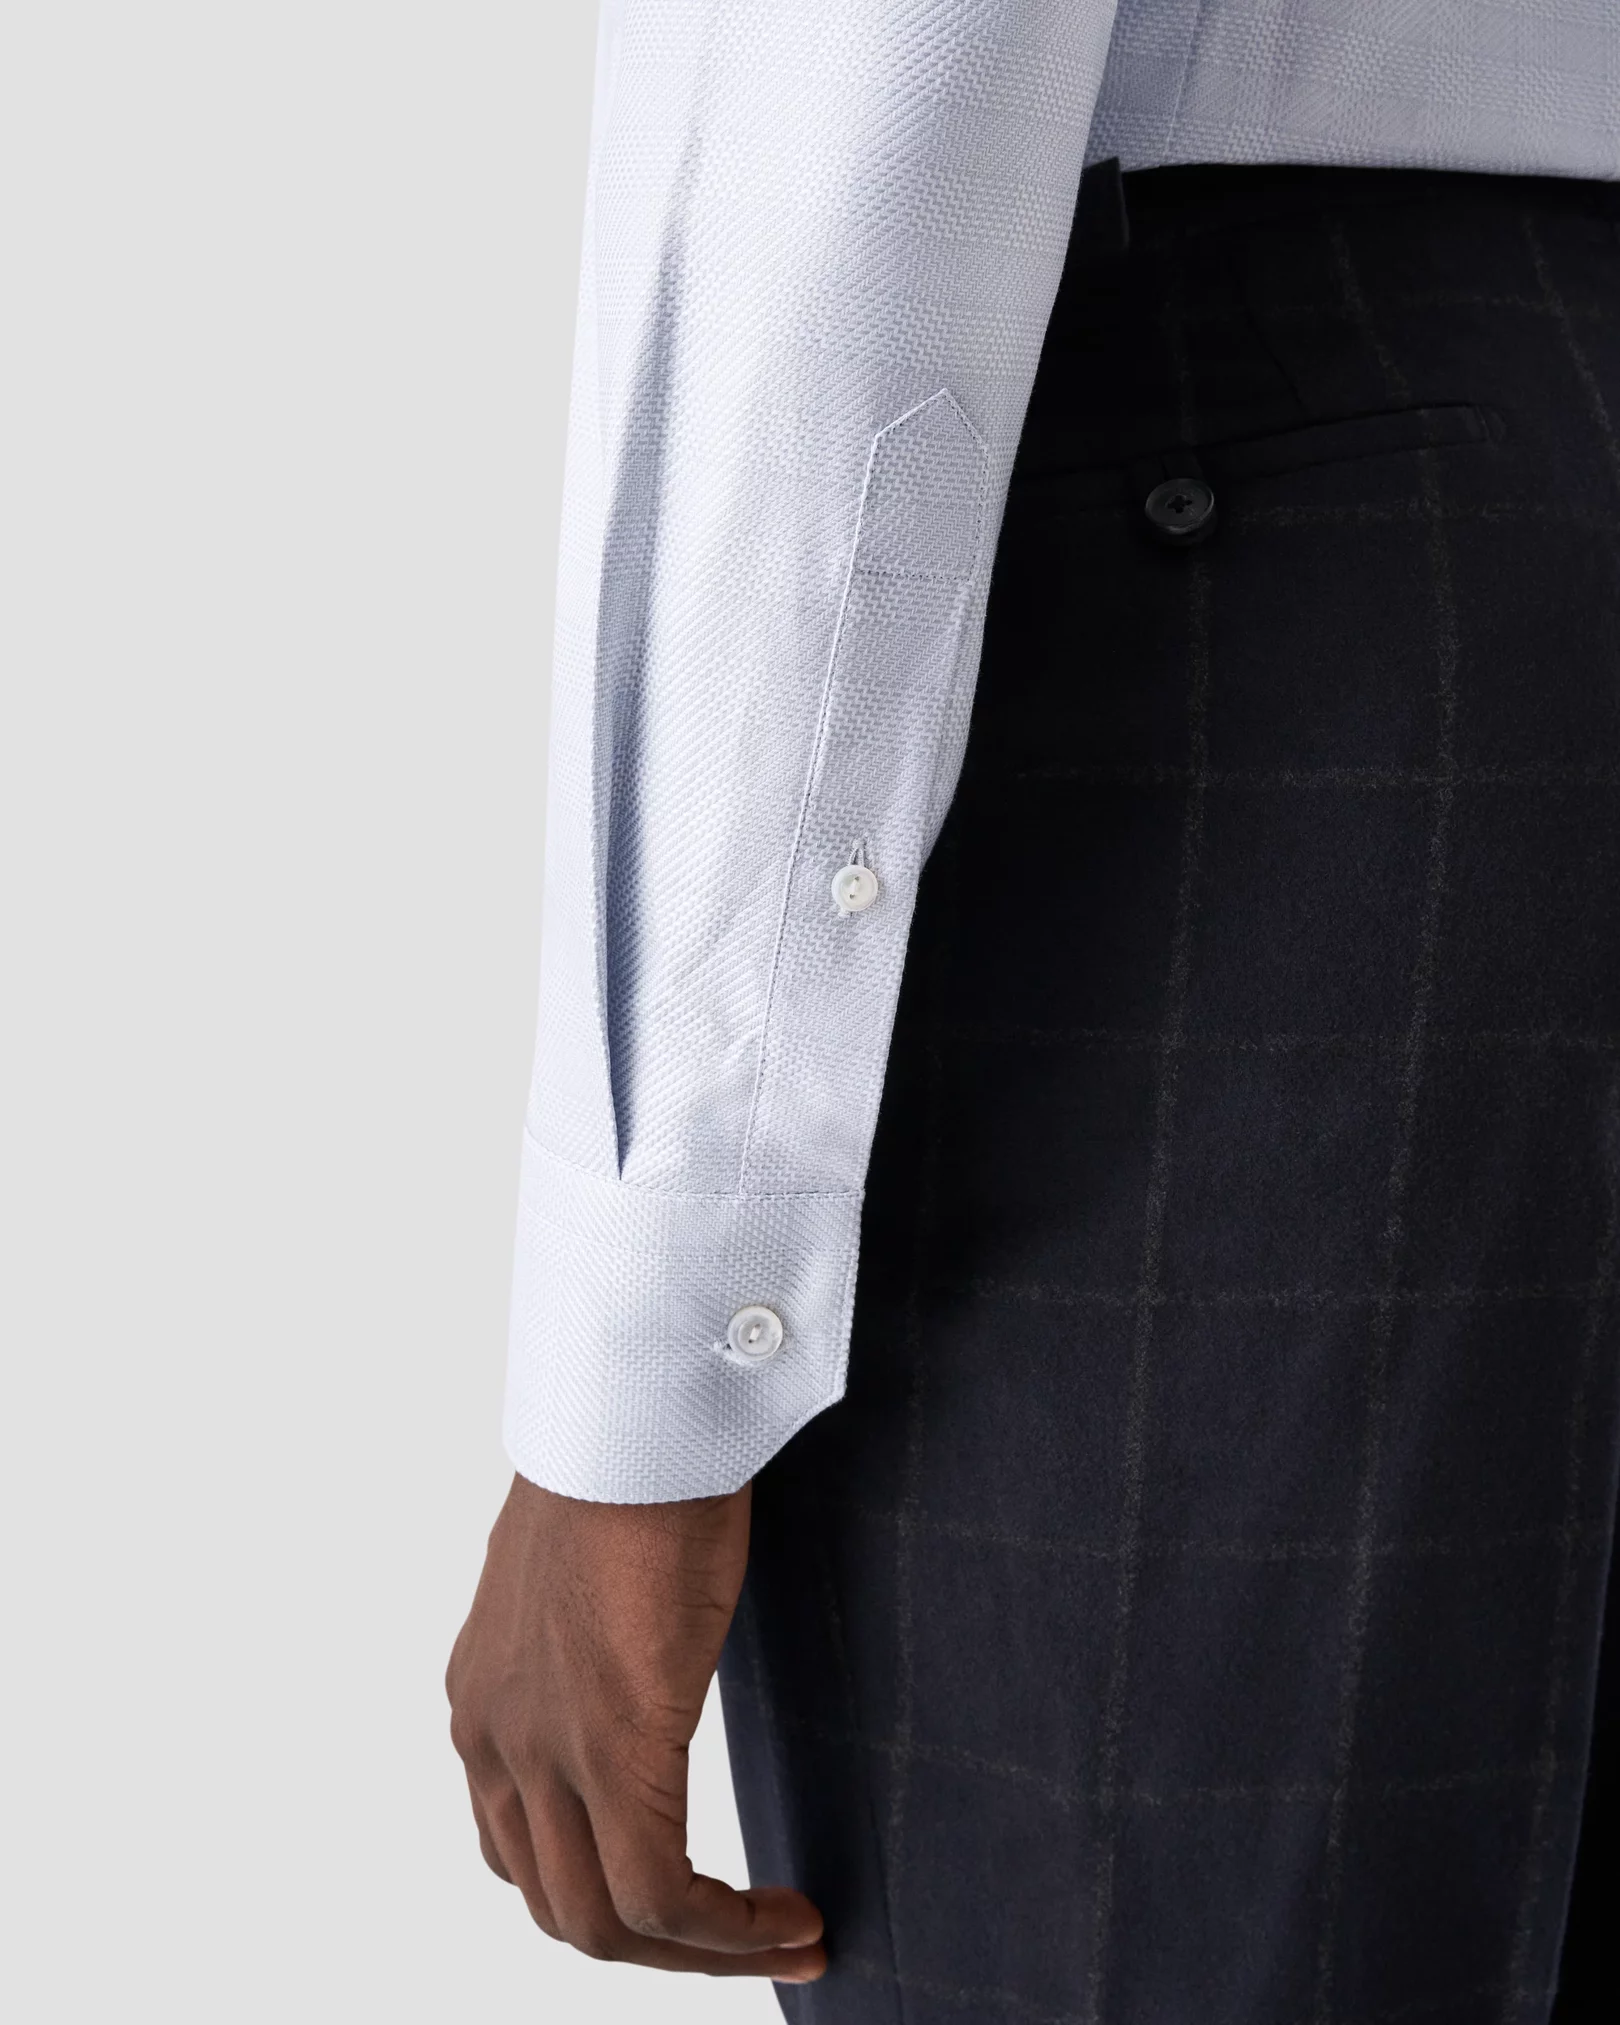 Light Grey Shirt Matching Pant || Light Grey Shirt Combination - YouTube